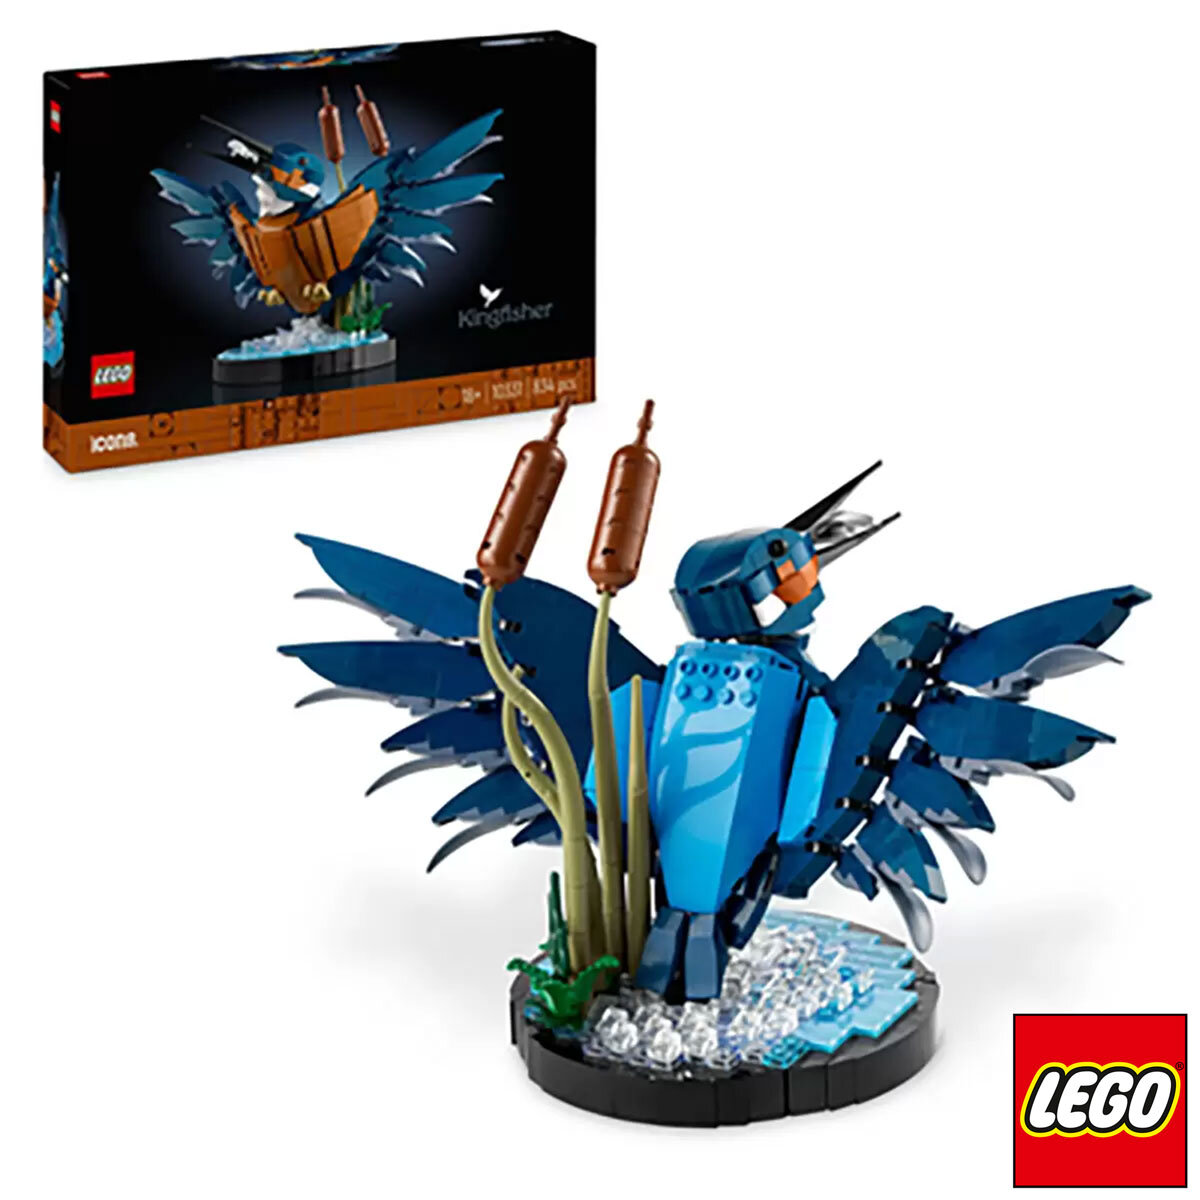 LEGO Icons Kingfisher - Model 10331 (18+ Years)